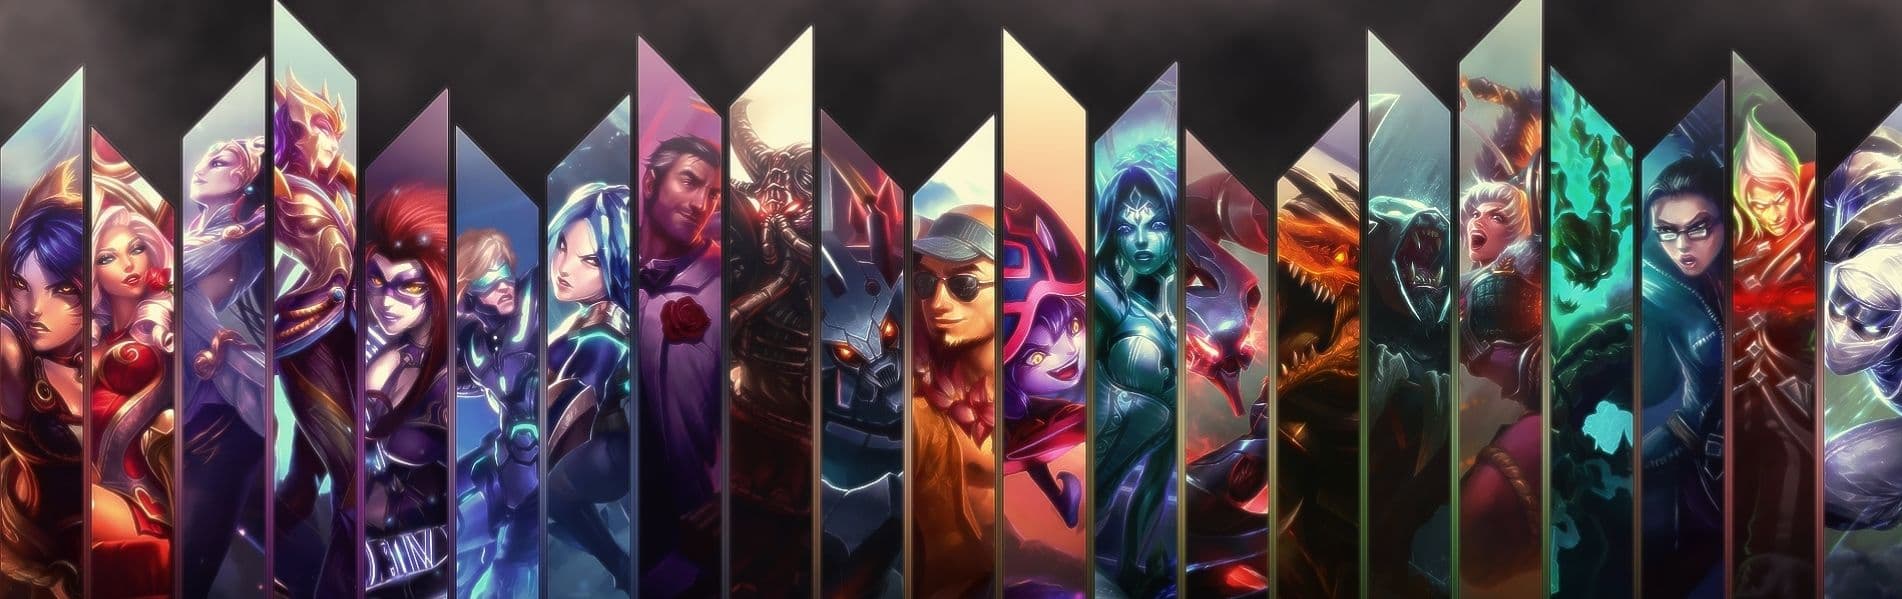 League Of Legends Banner 1